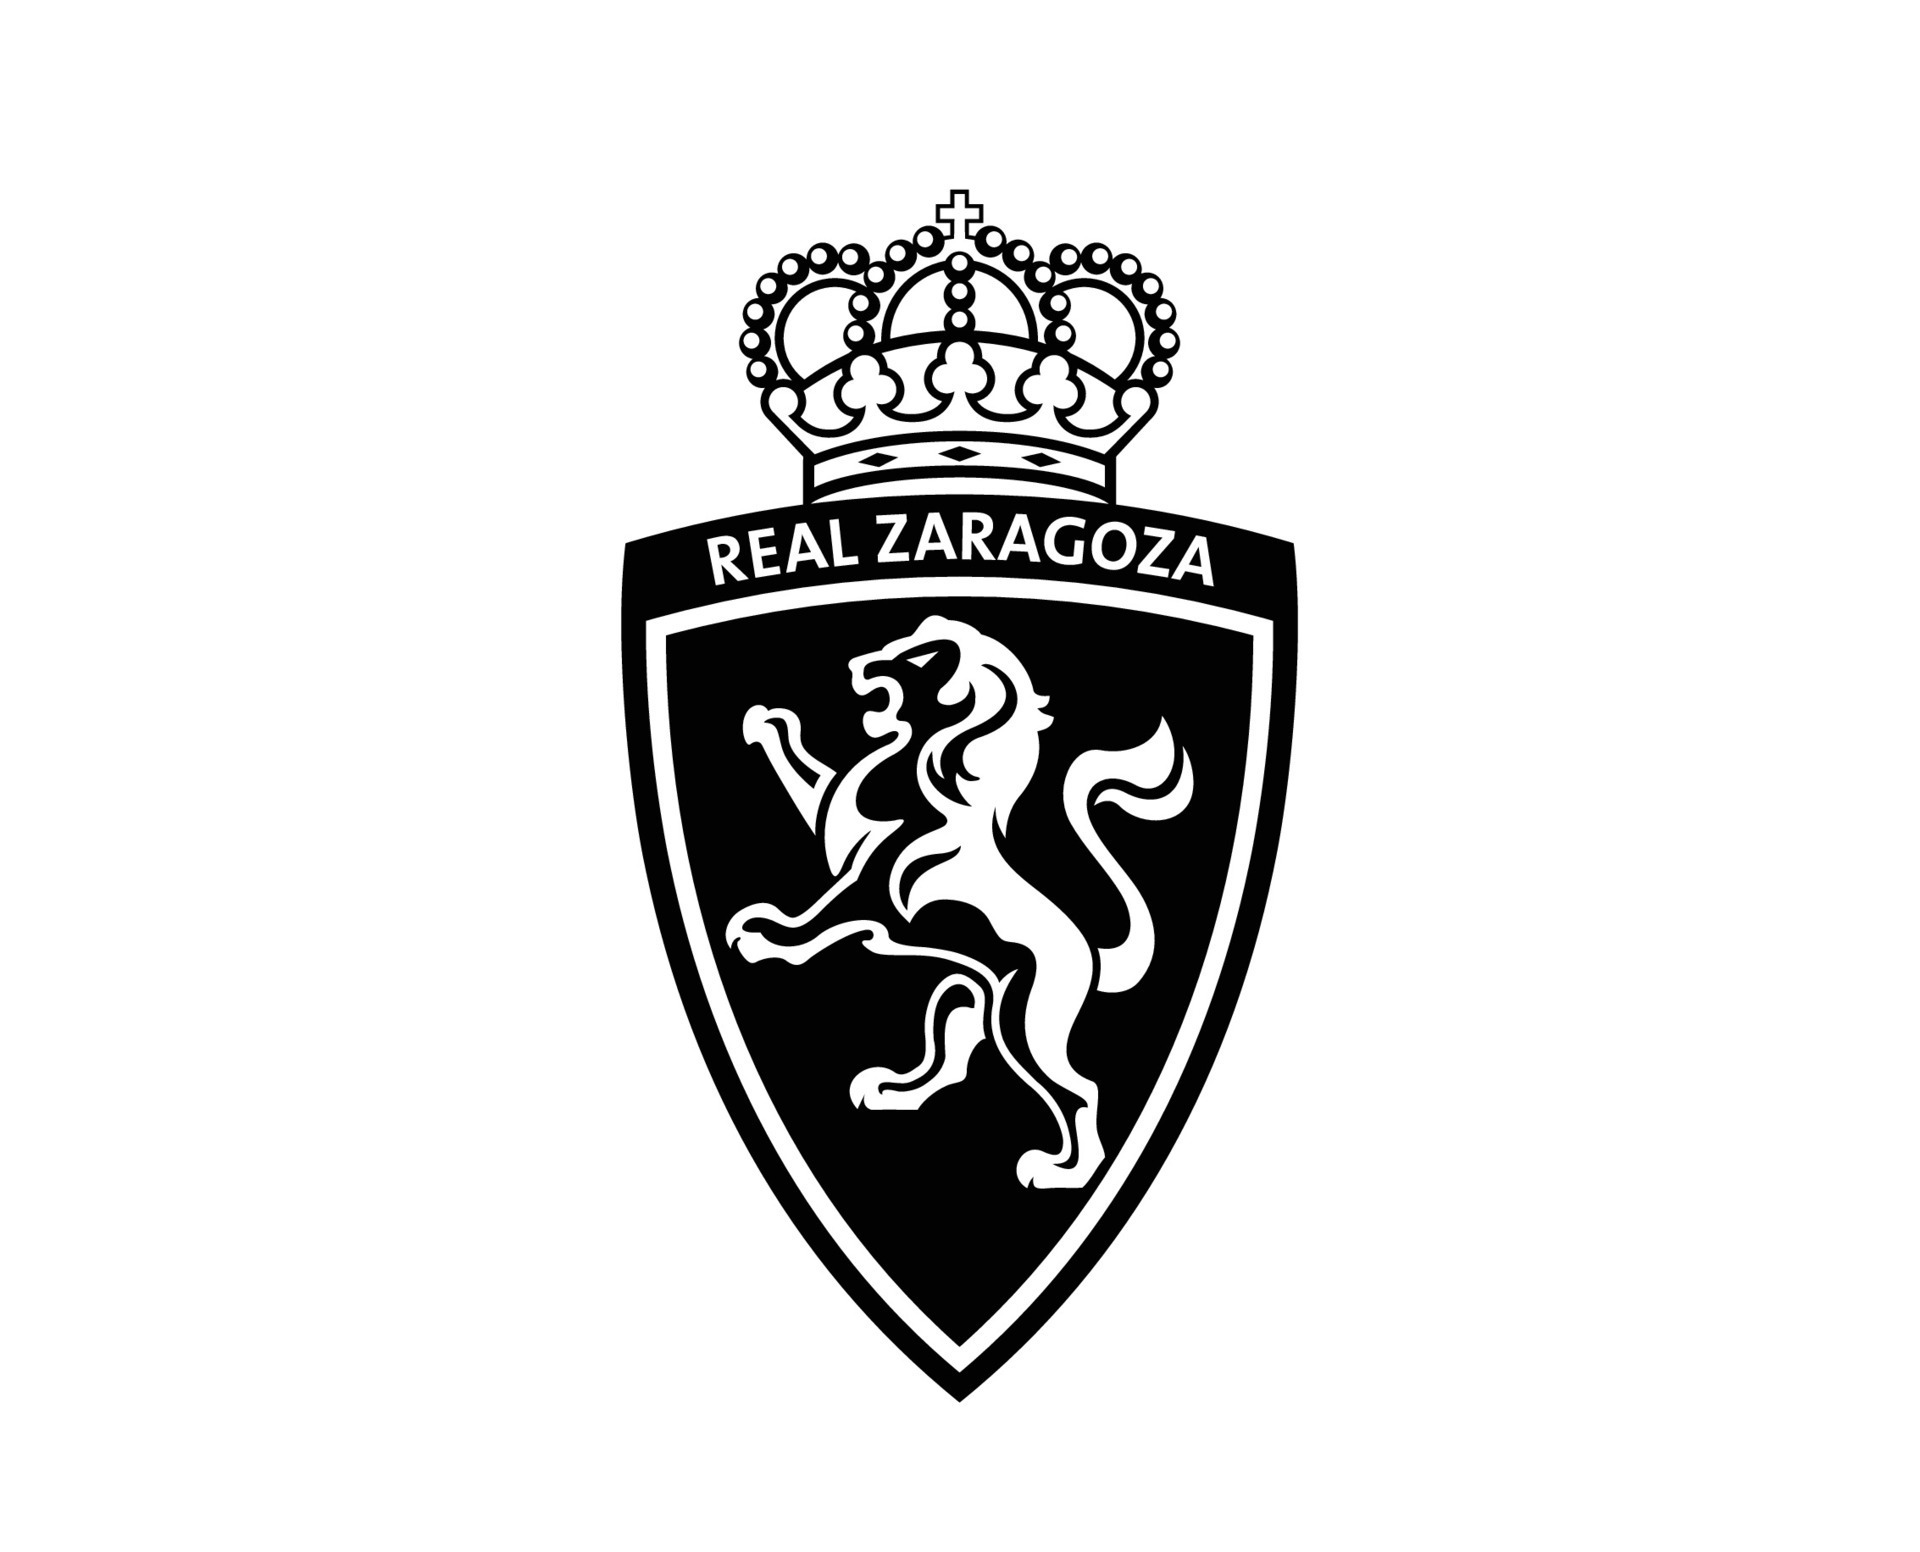 https://static.vecteezy.com/system/resources/previews/027/011/583/original/real-zaragoza-club-logo-symbol-black-la-liga-spain-football-abstract-design-illustration-free-vector.jpg